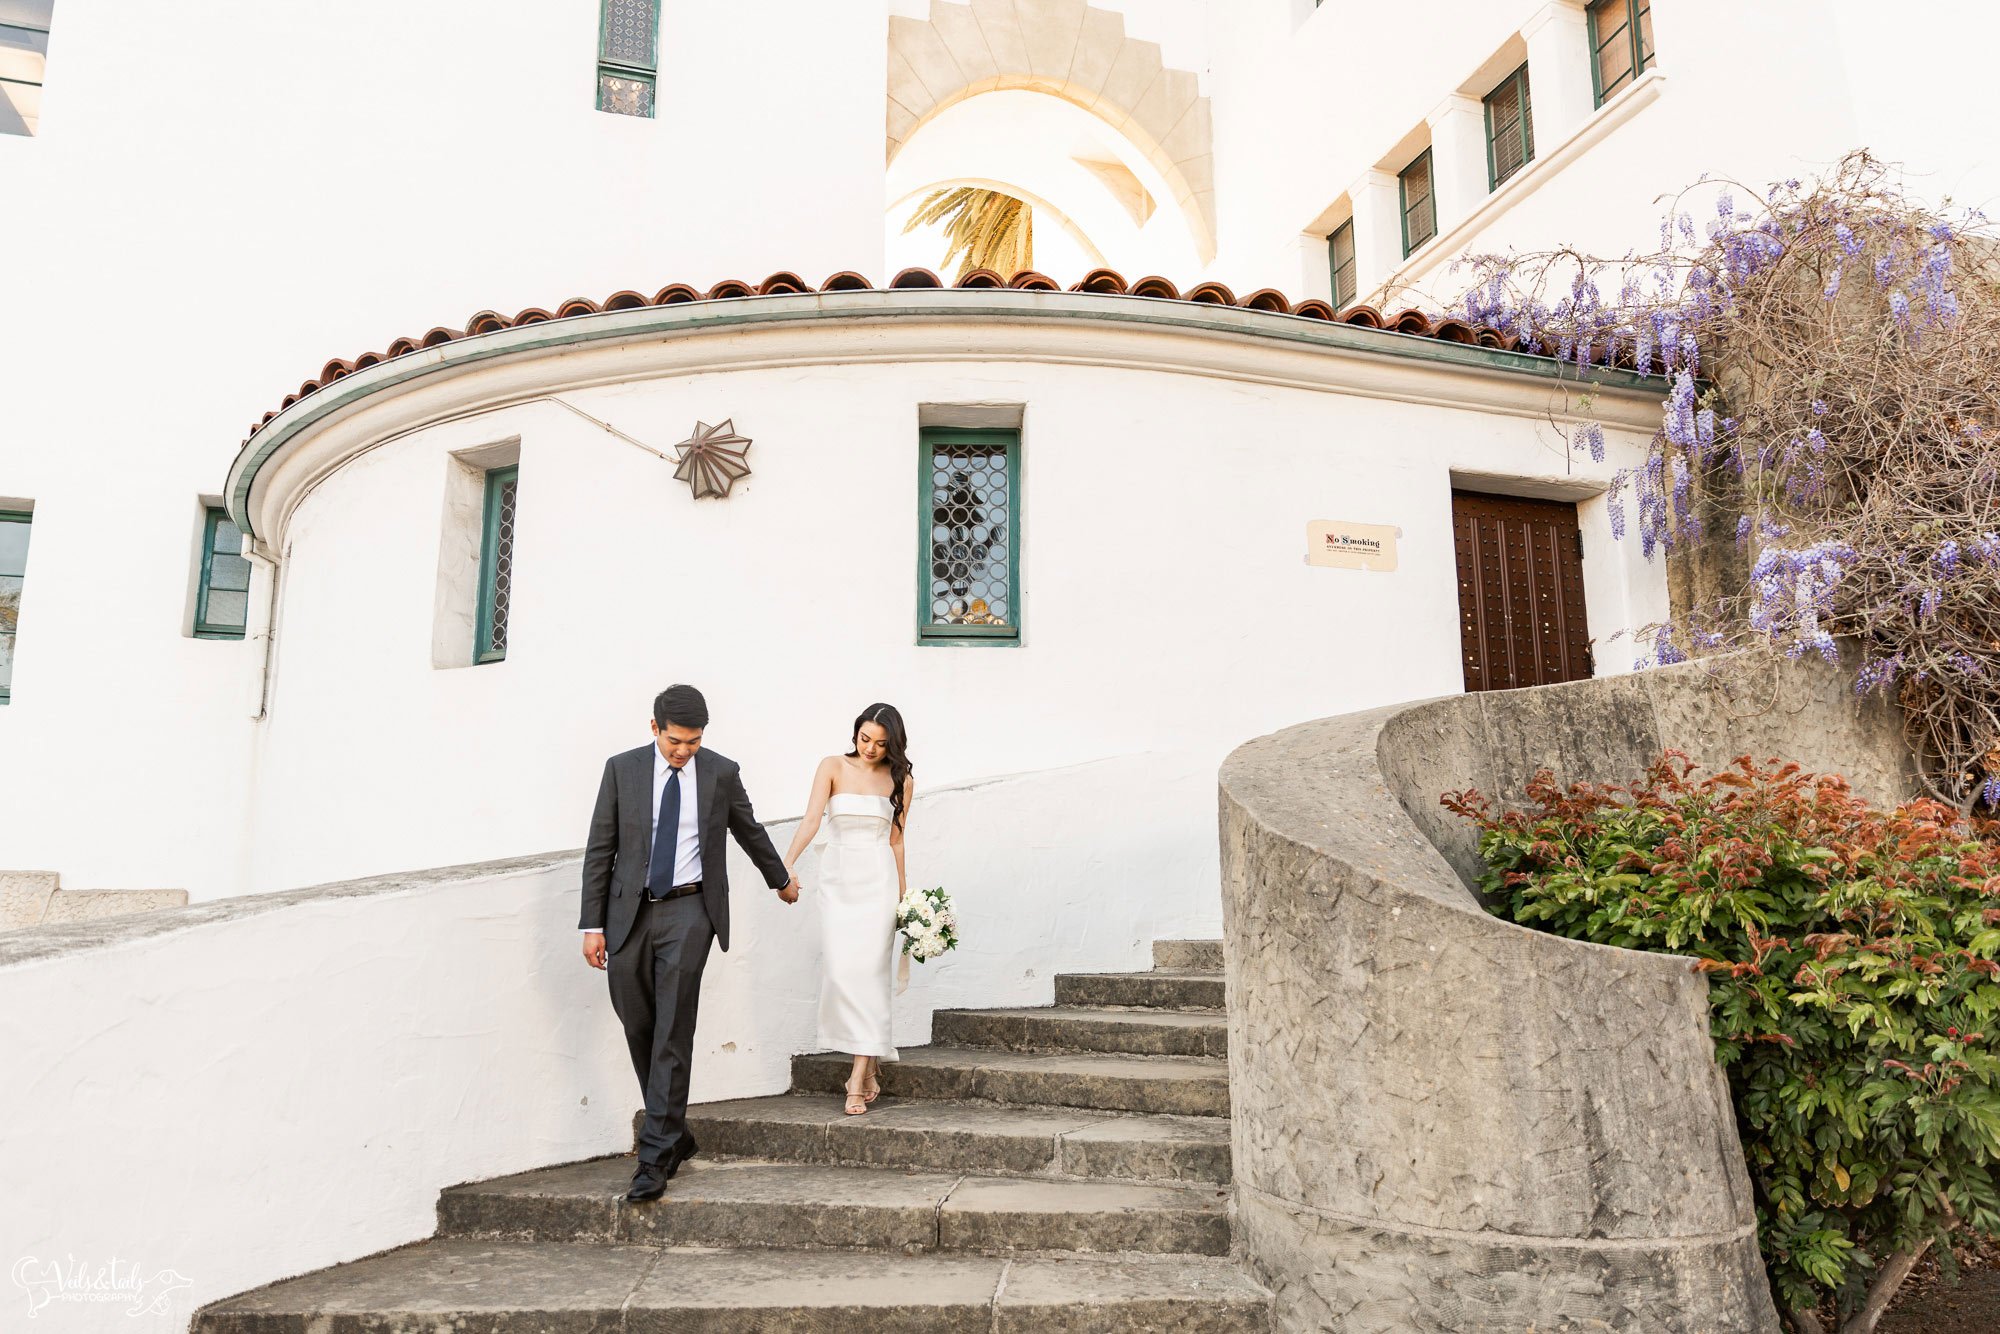 Santa Barbara Courthouse wedding photographer